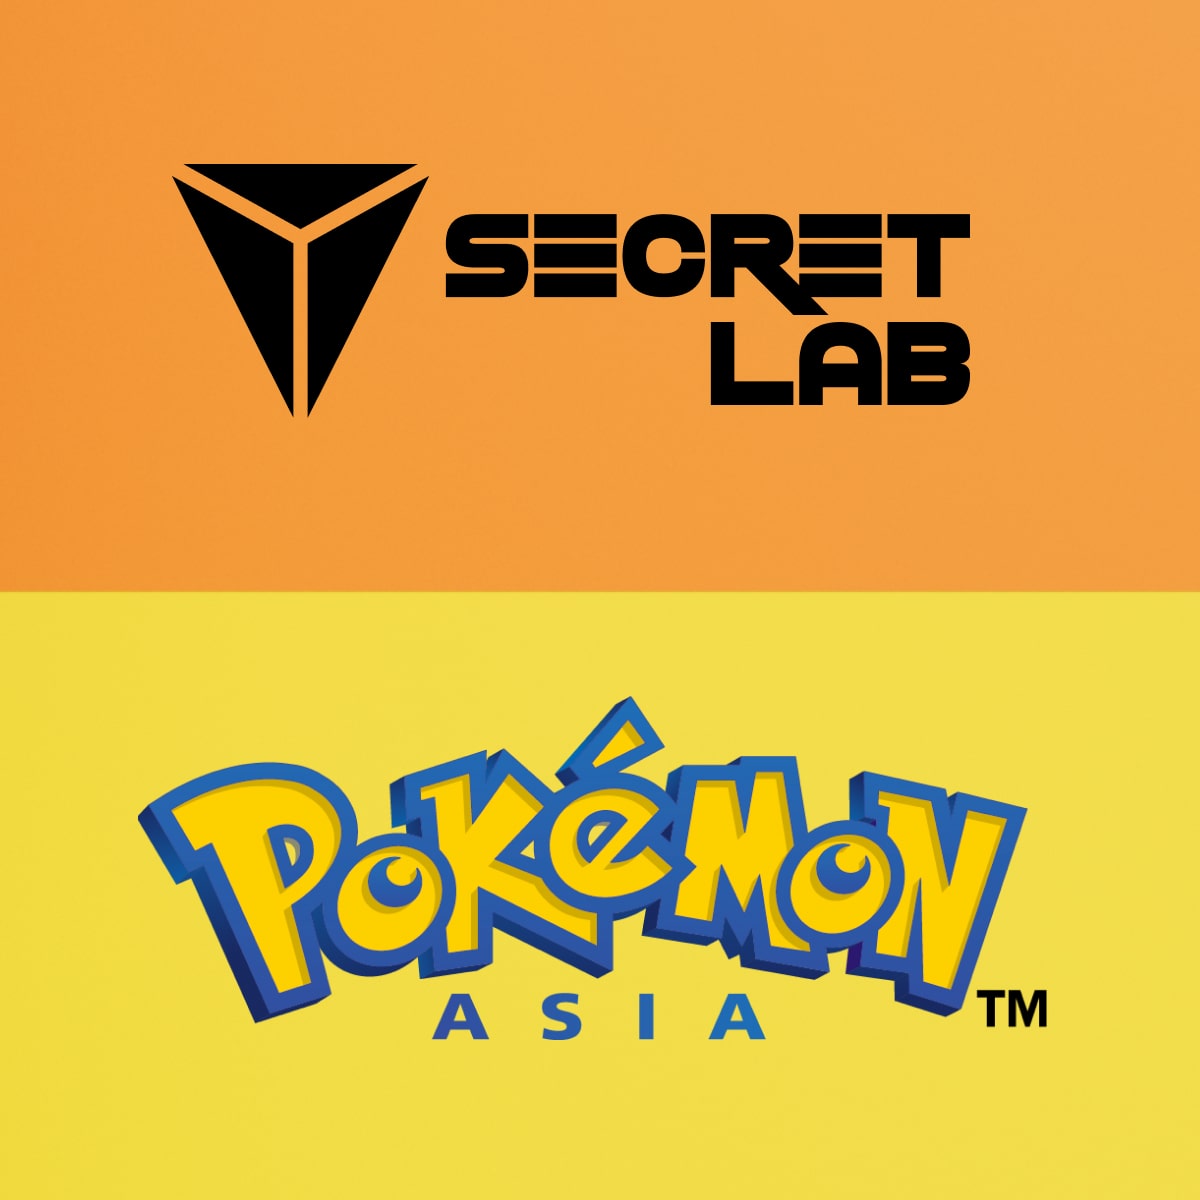 Pokémon Collection by Secretlab